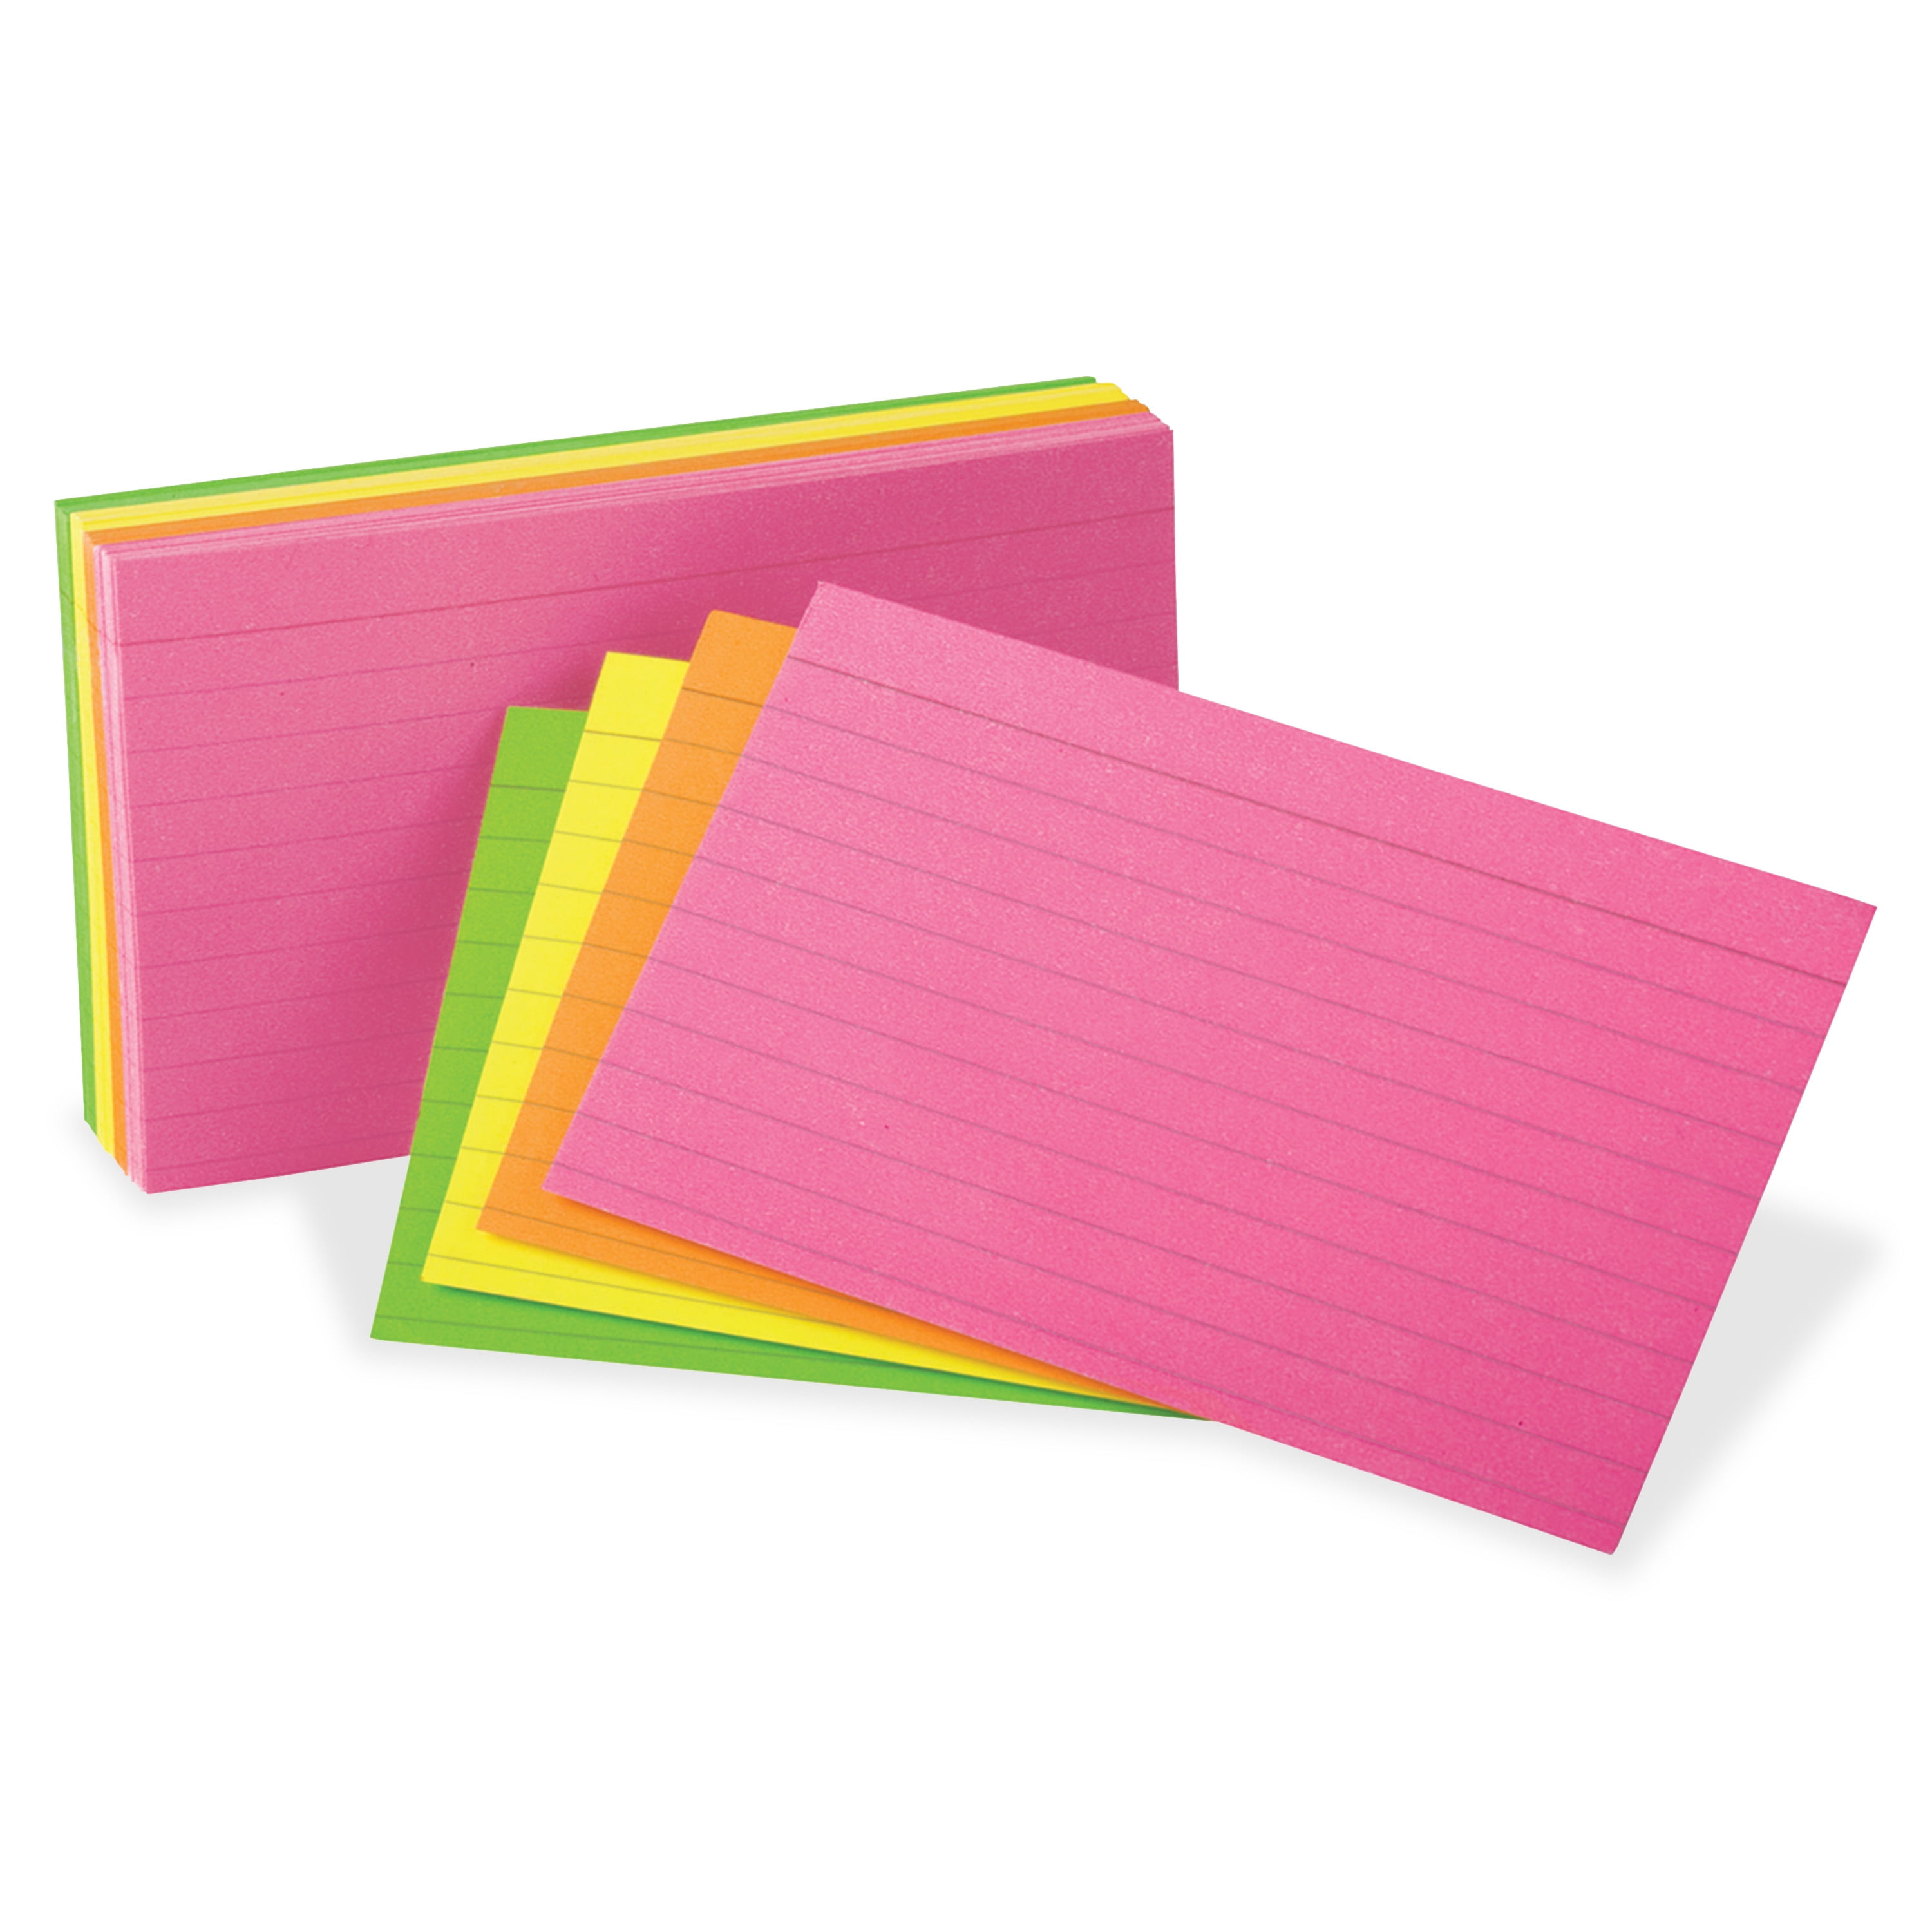 Enday Multi-Purpose 3 x 5 Card File Box, Pink